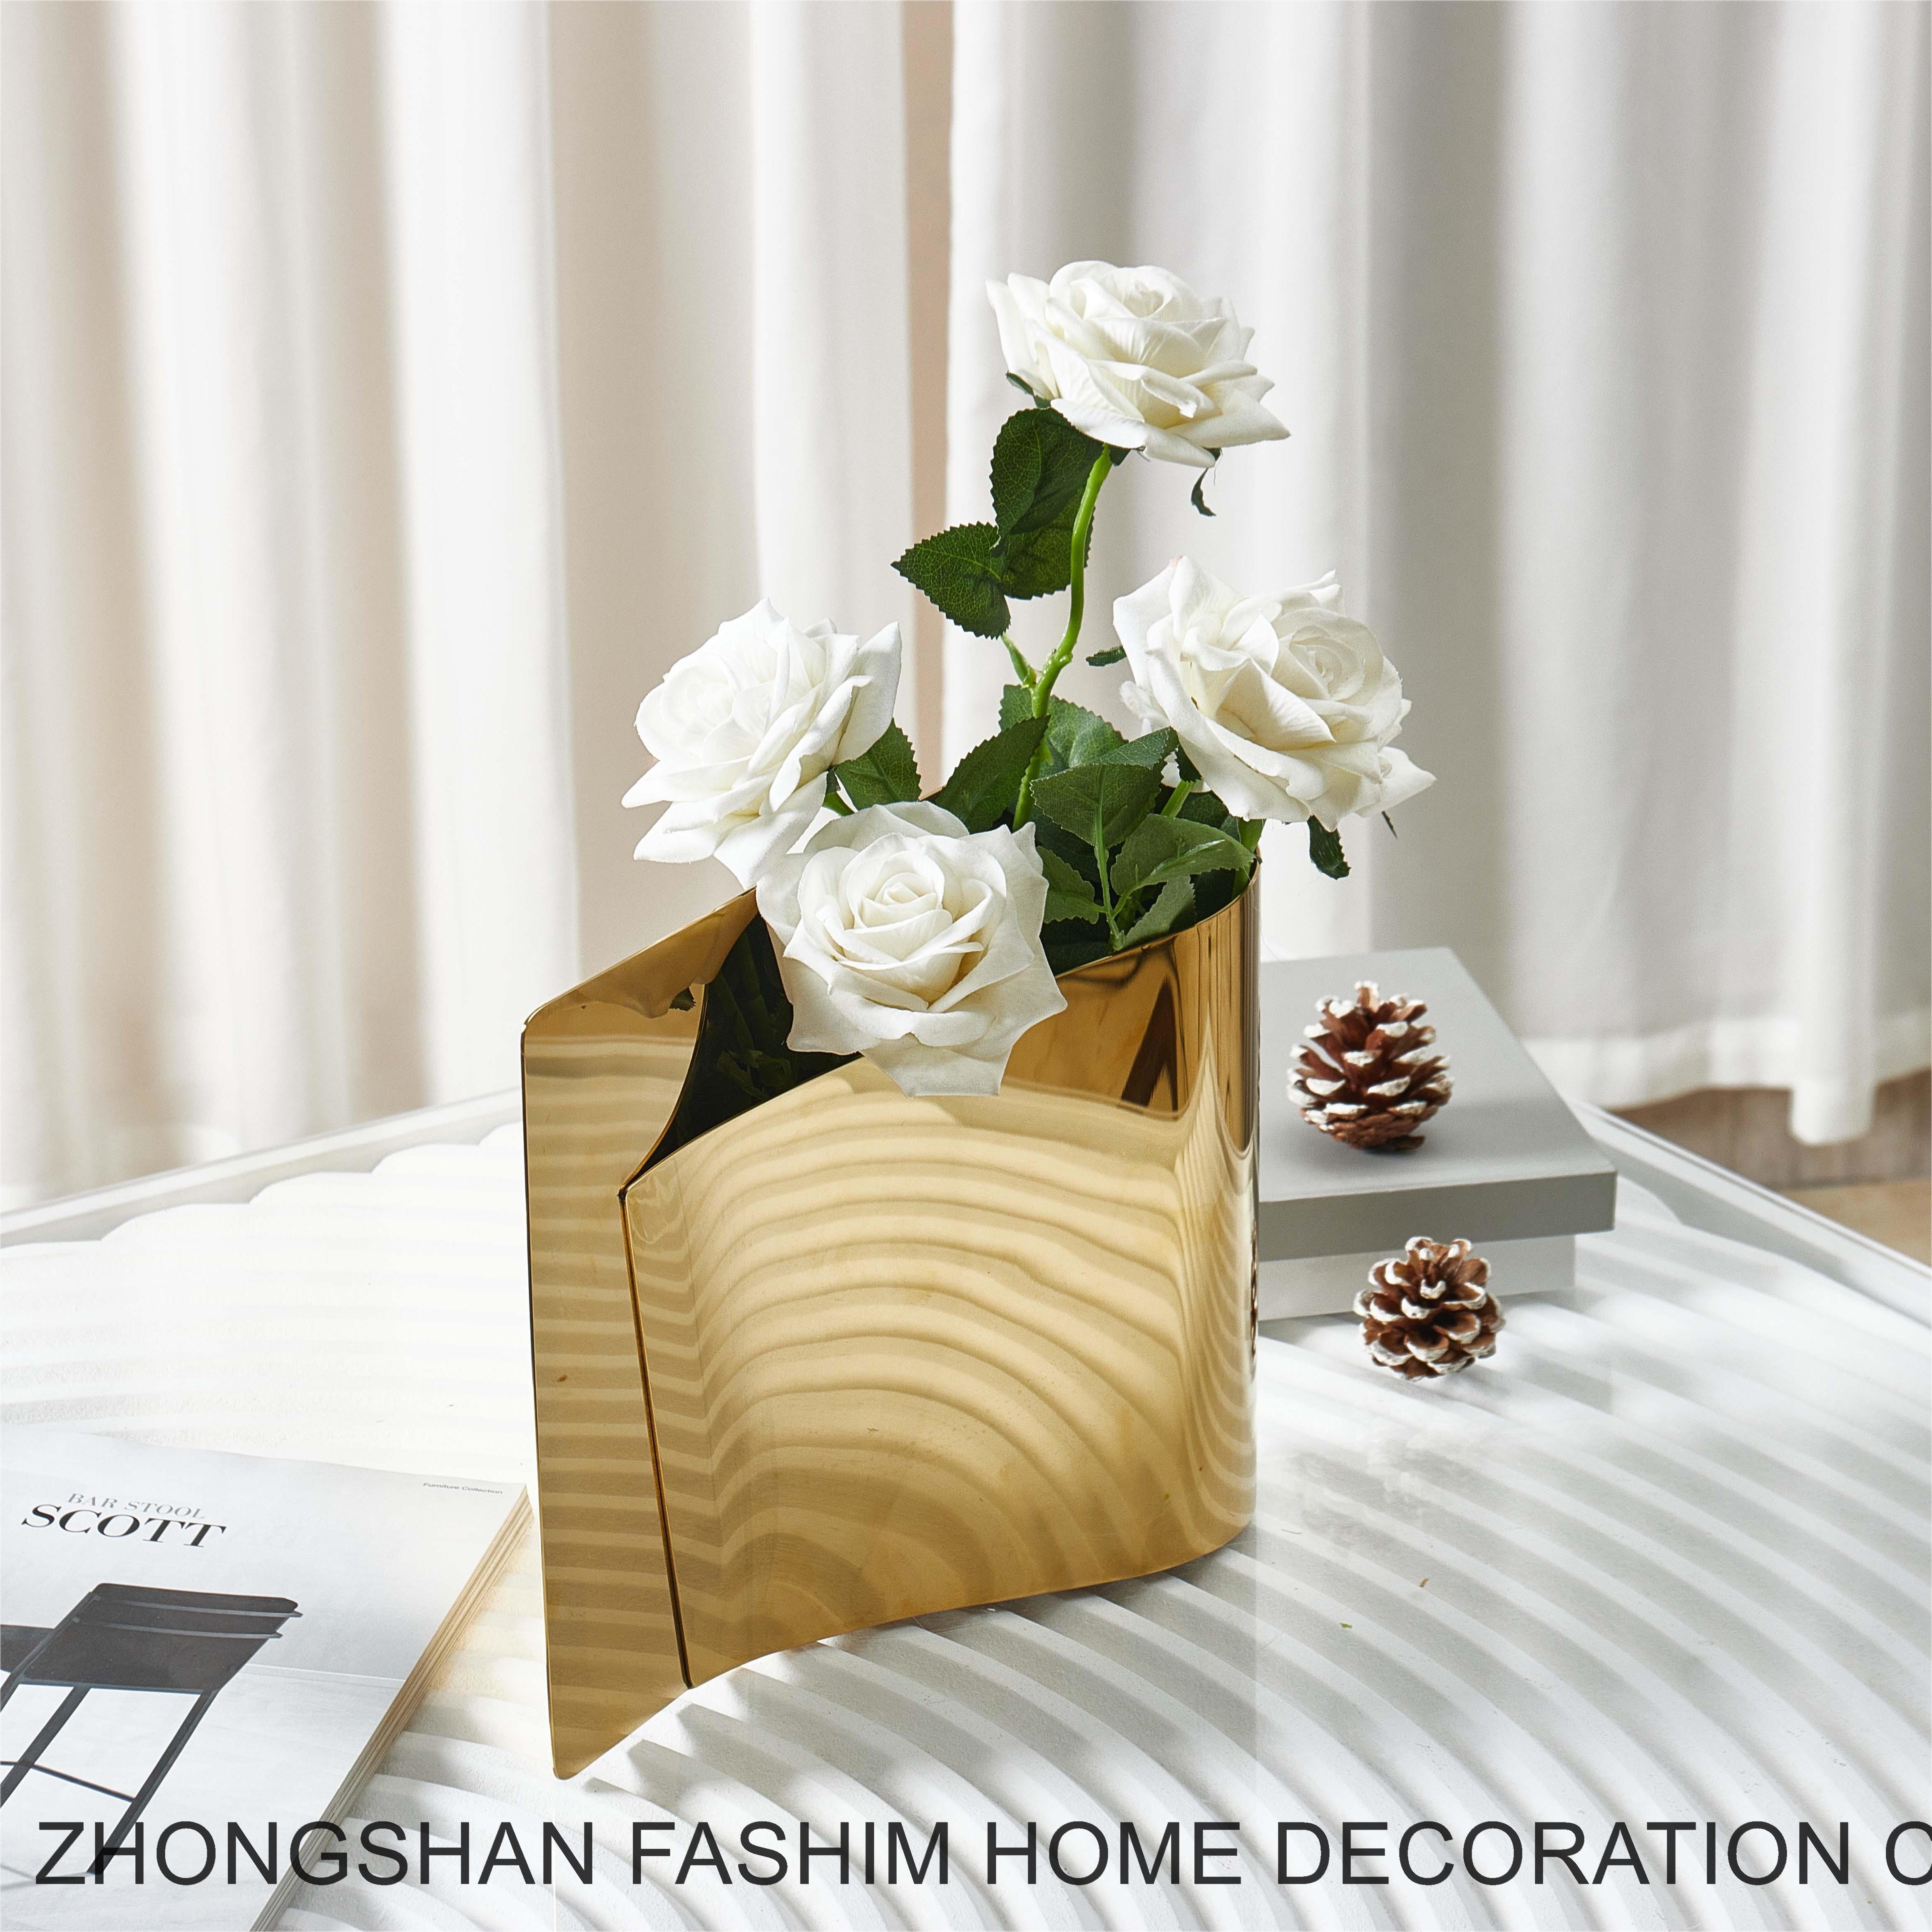 Fashimdecor stainless steel interior decorative flower vases